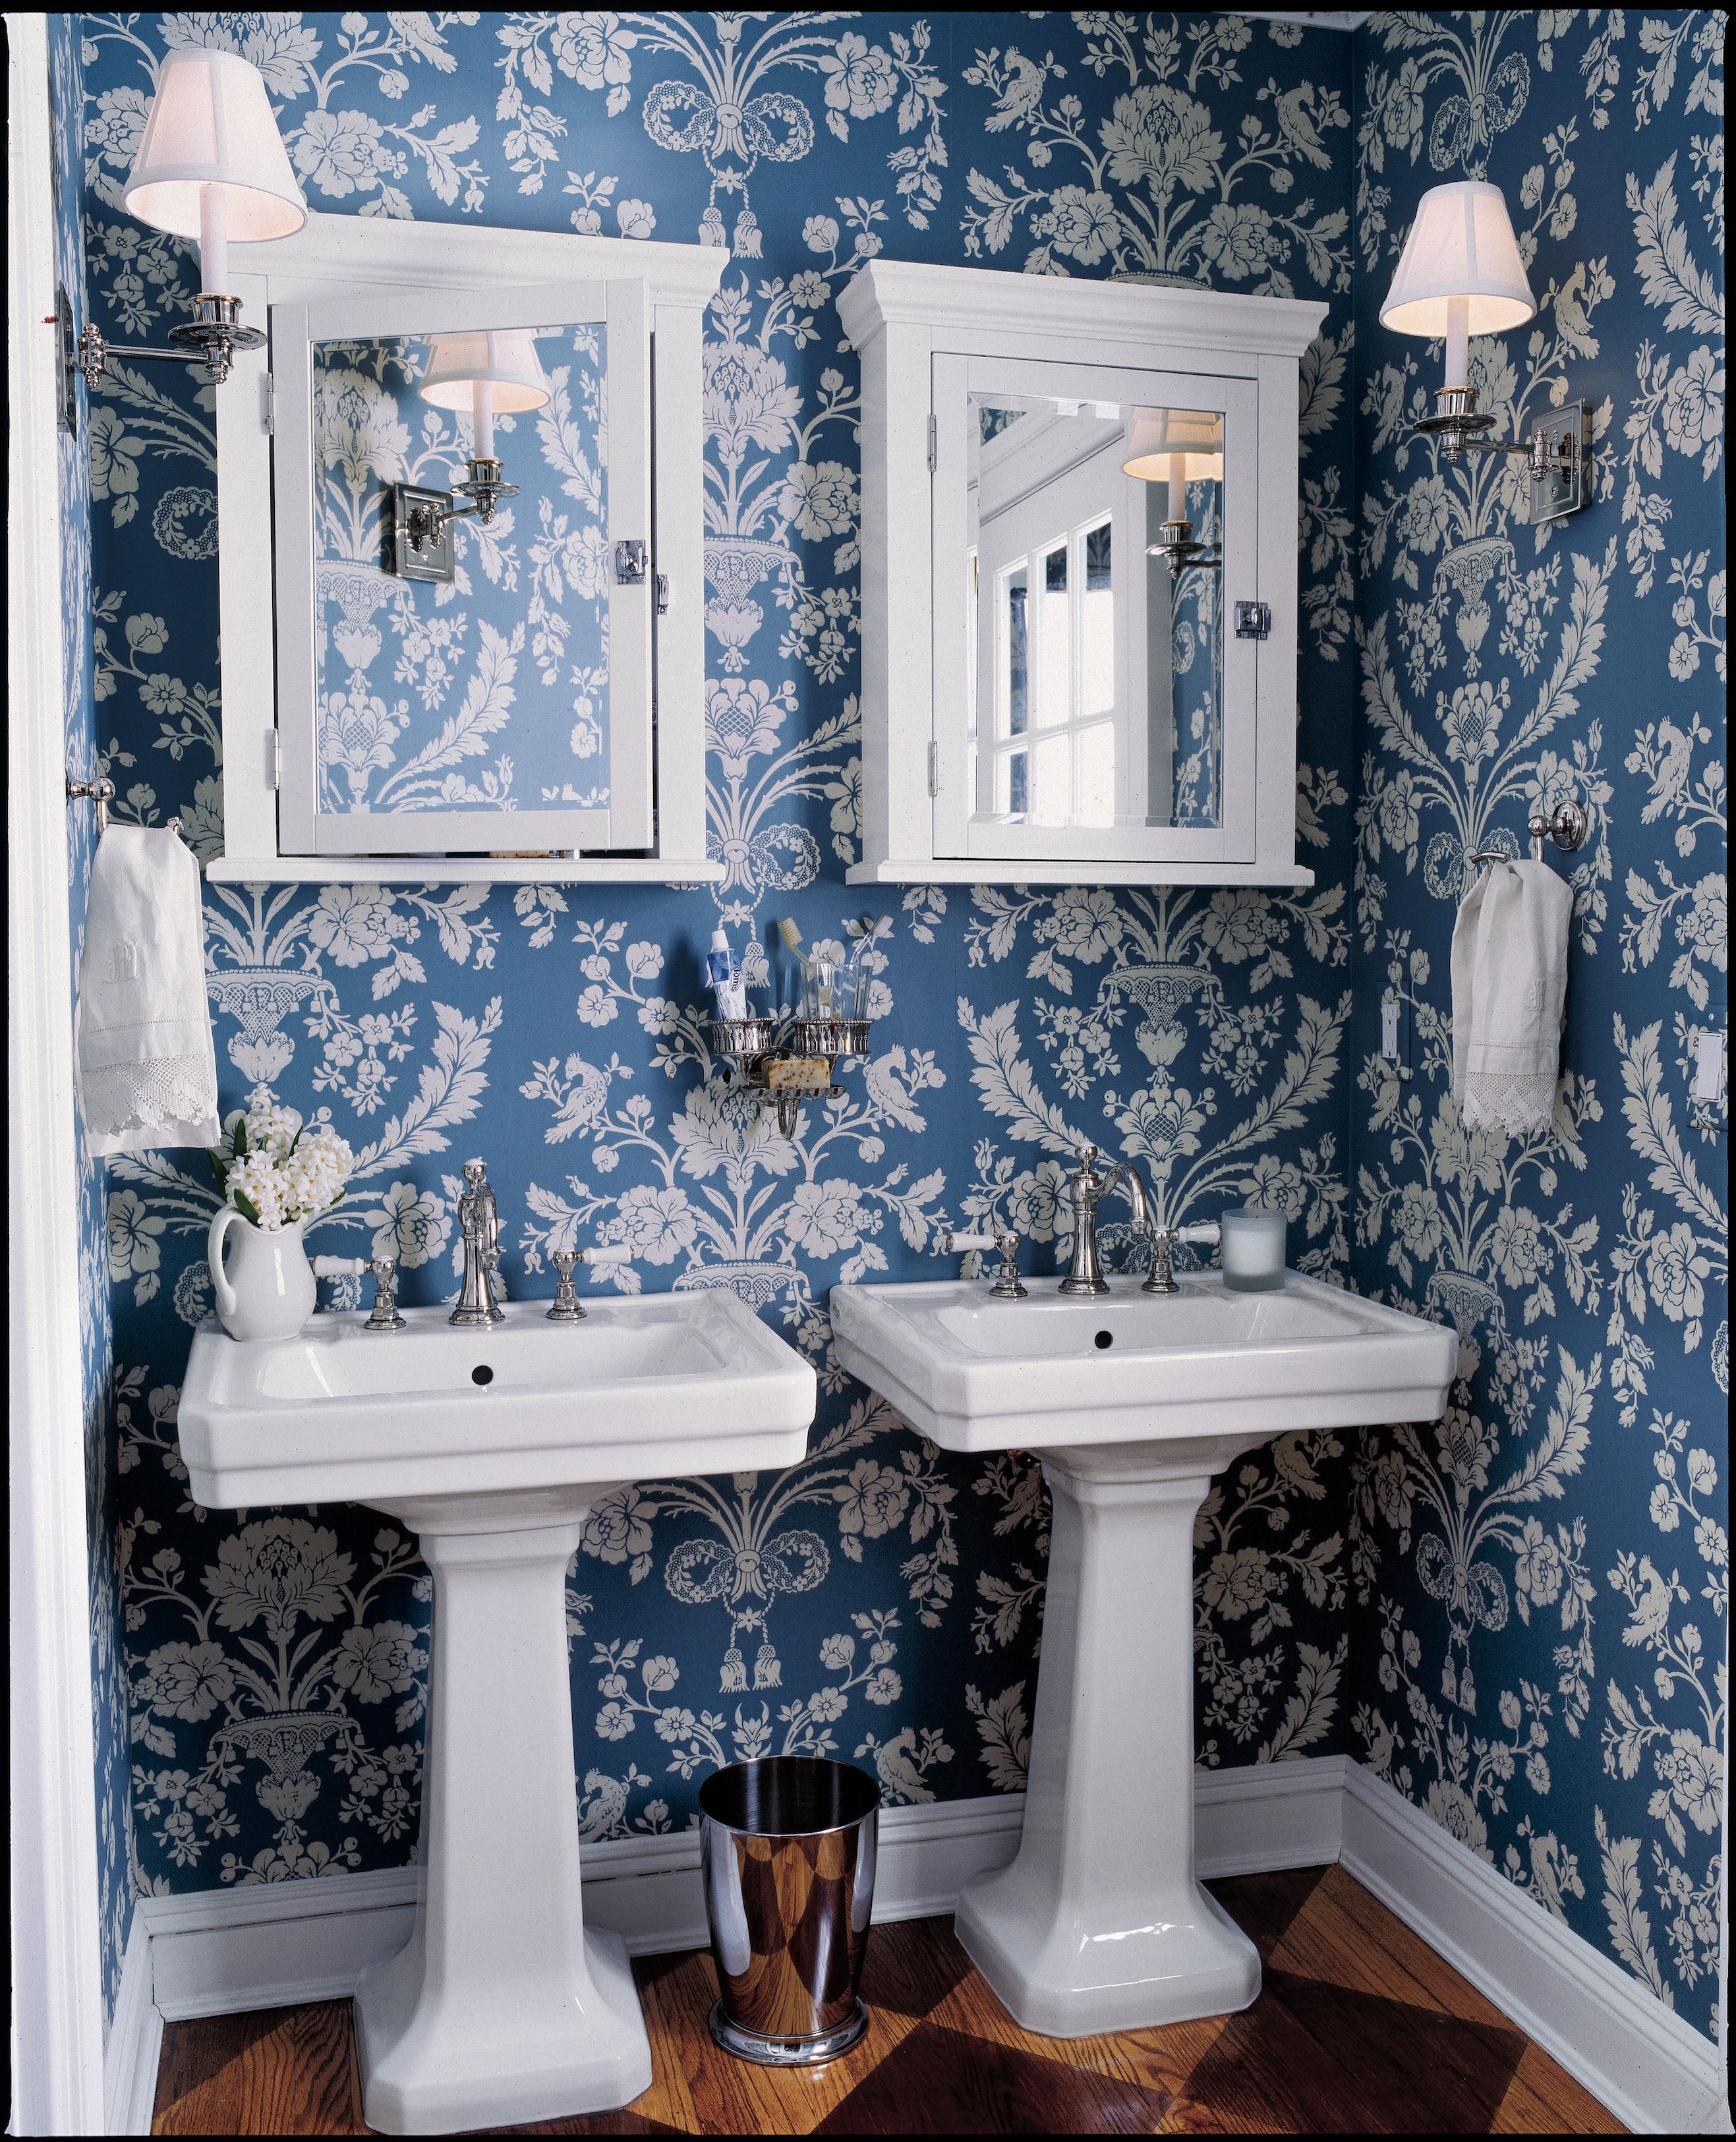 Bathroom Renovation with Wallpaper 60 Bathroom Wallpaper Inspiration  Decor Ideas  YouTube